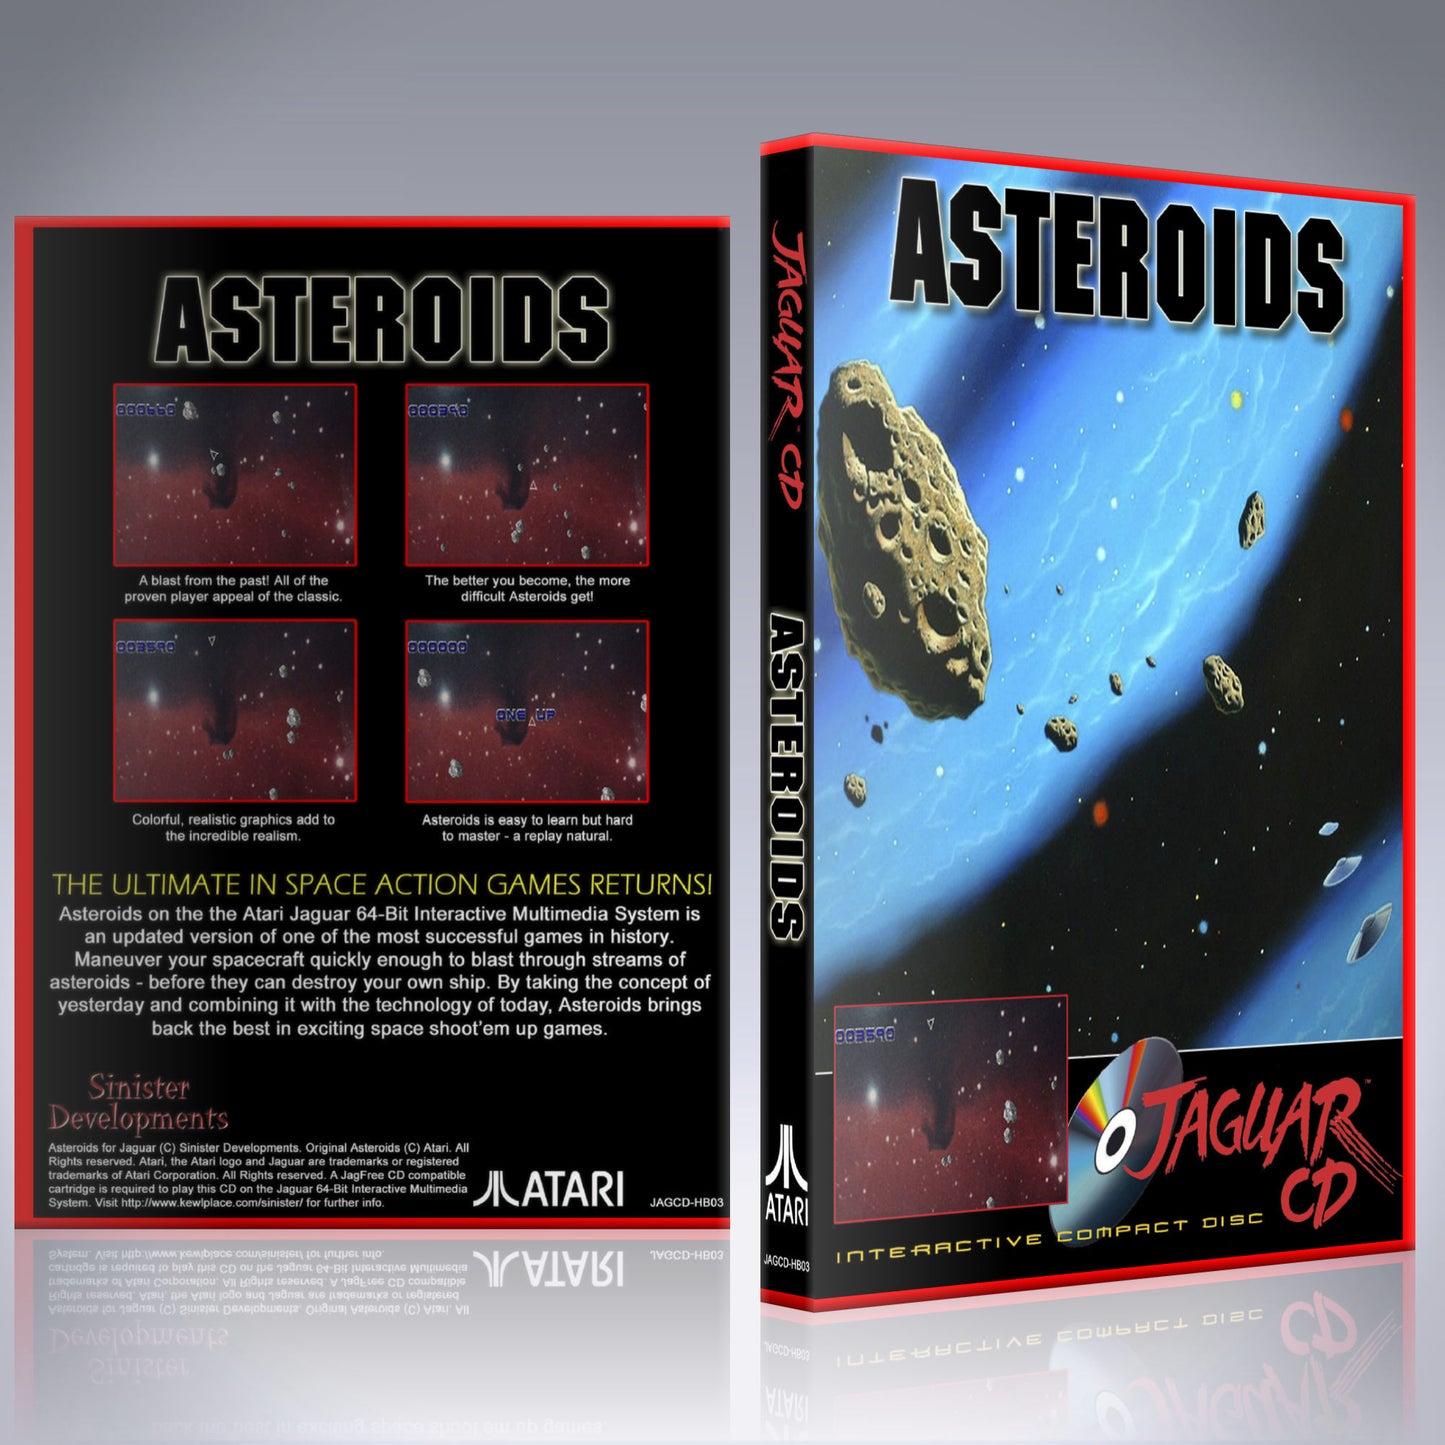 Atari Jaguar CD Case - NO GAME - Asteroids